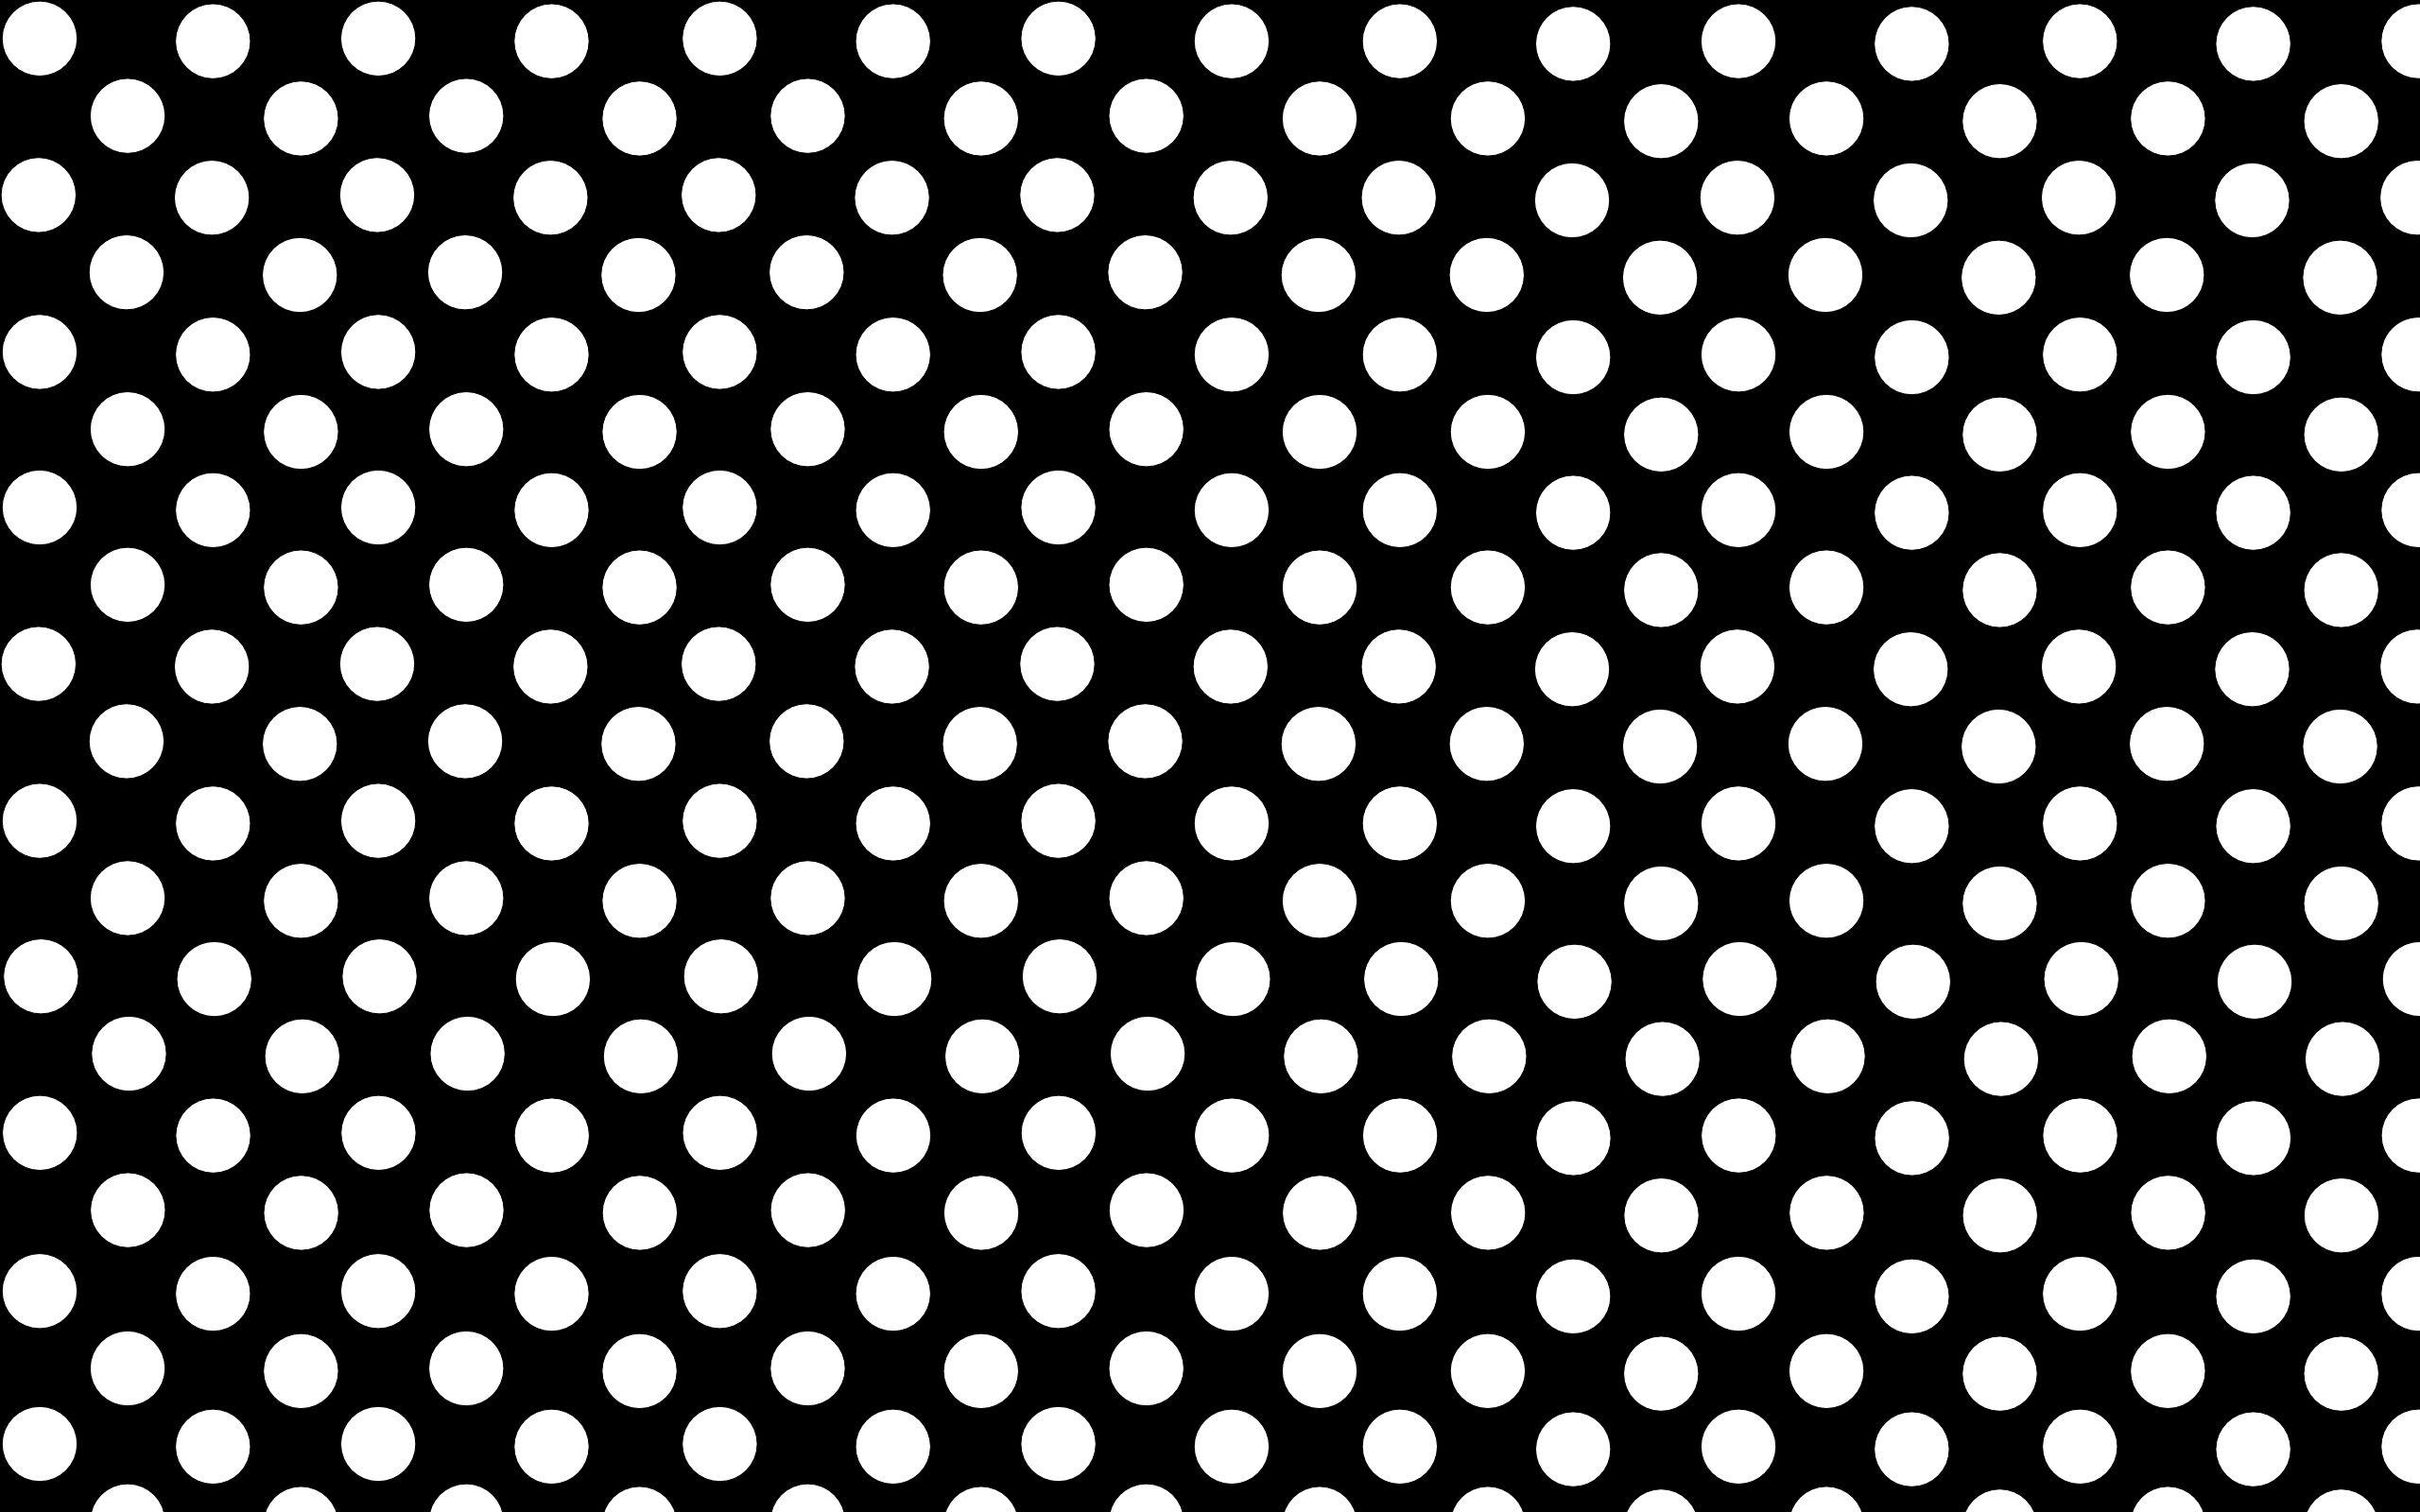 3. Black and White Polka Dot Nails - wide 8